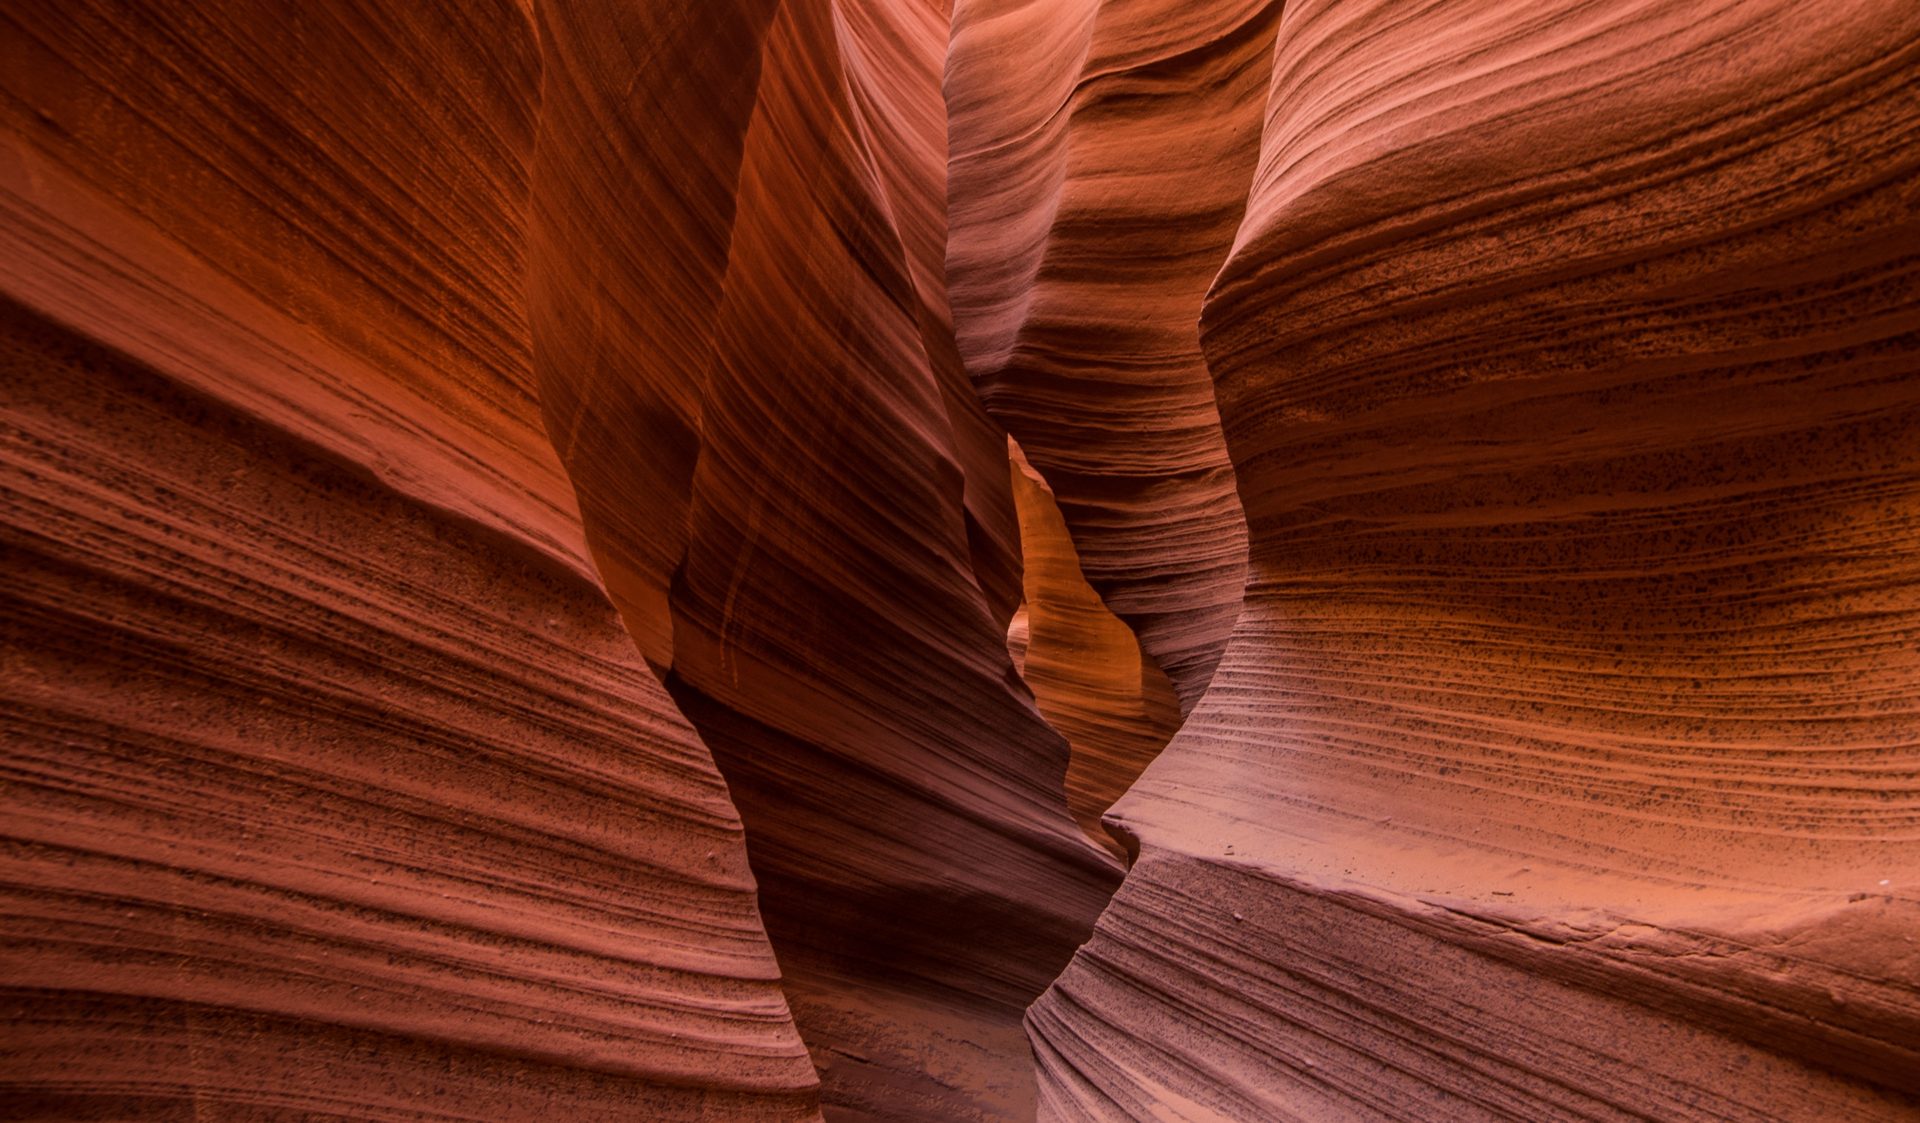 Image of Antelope canyon